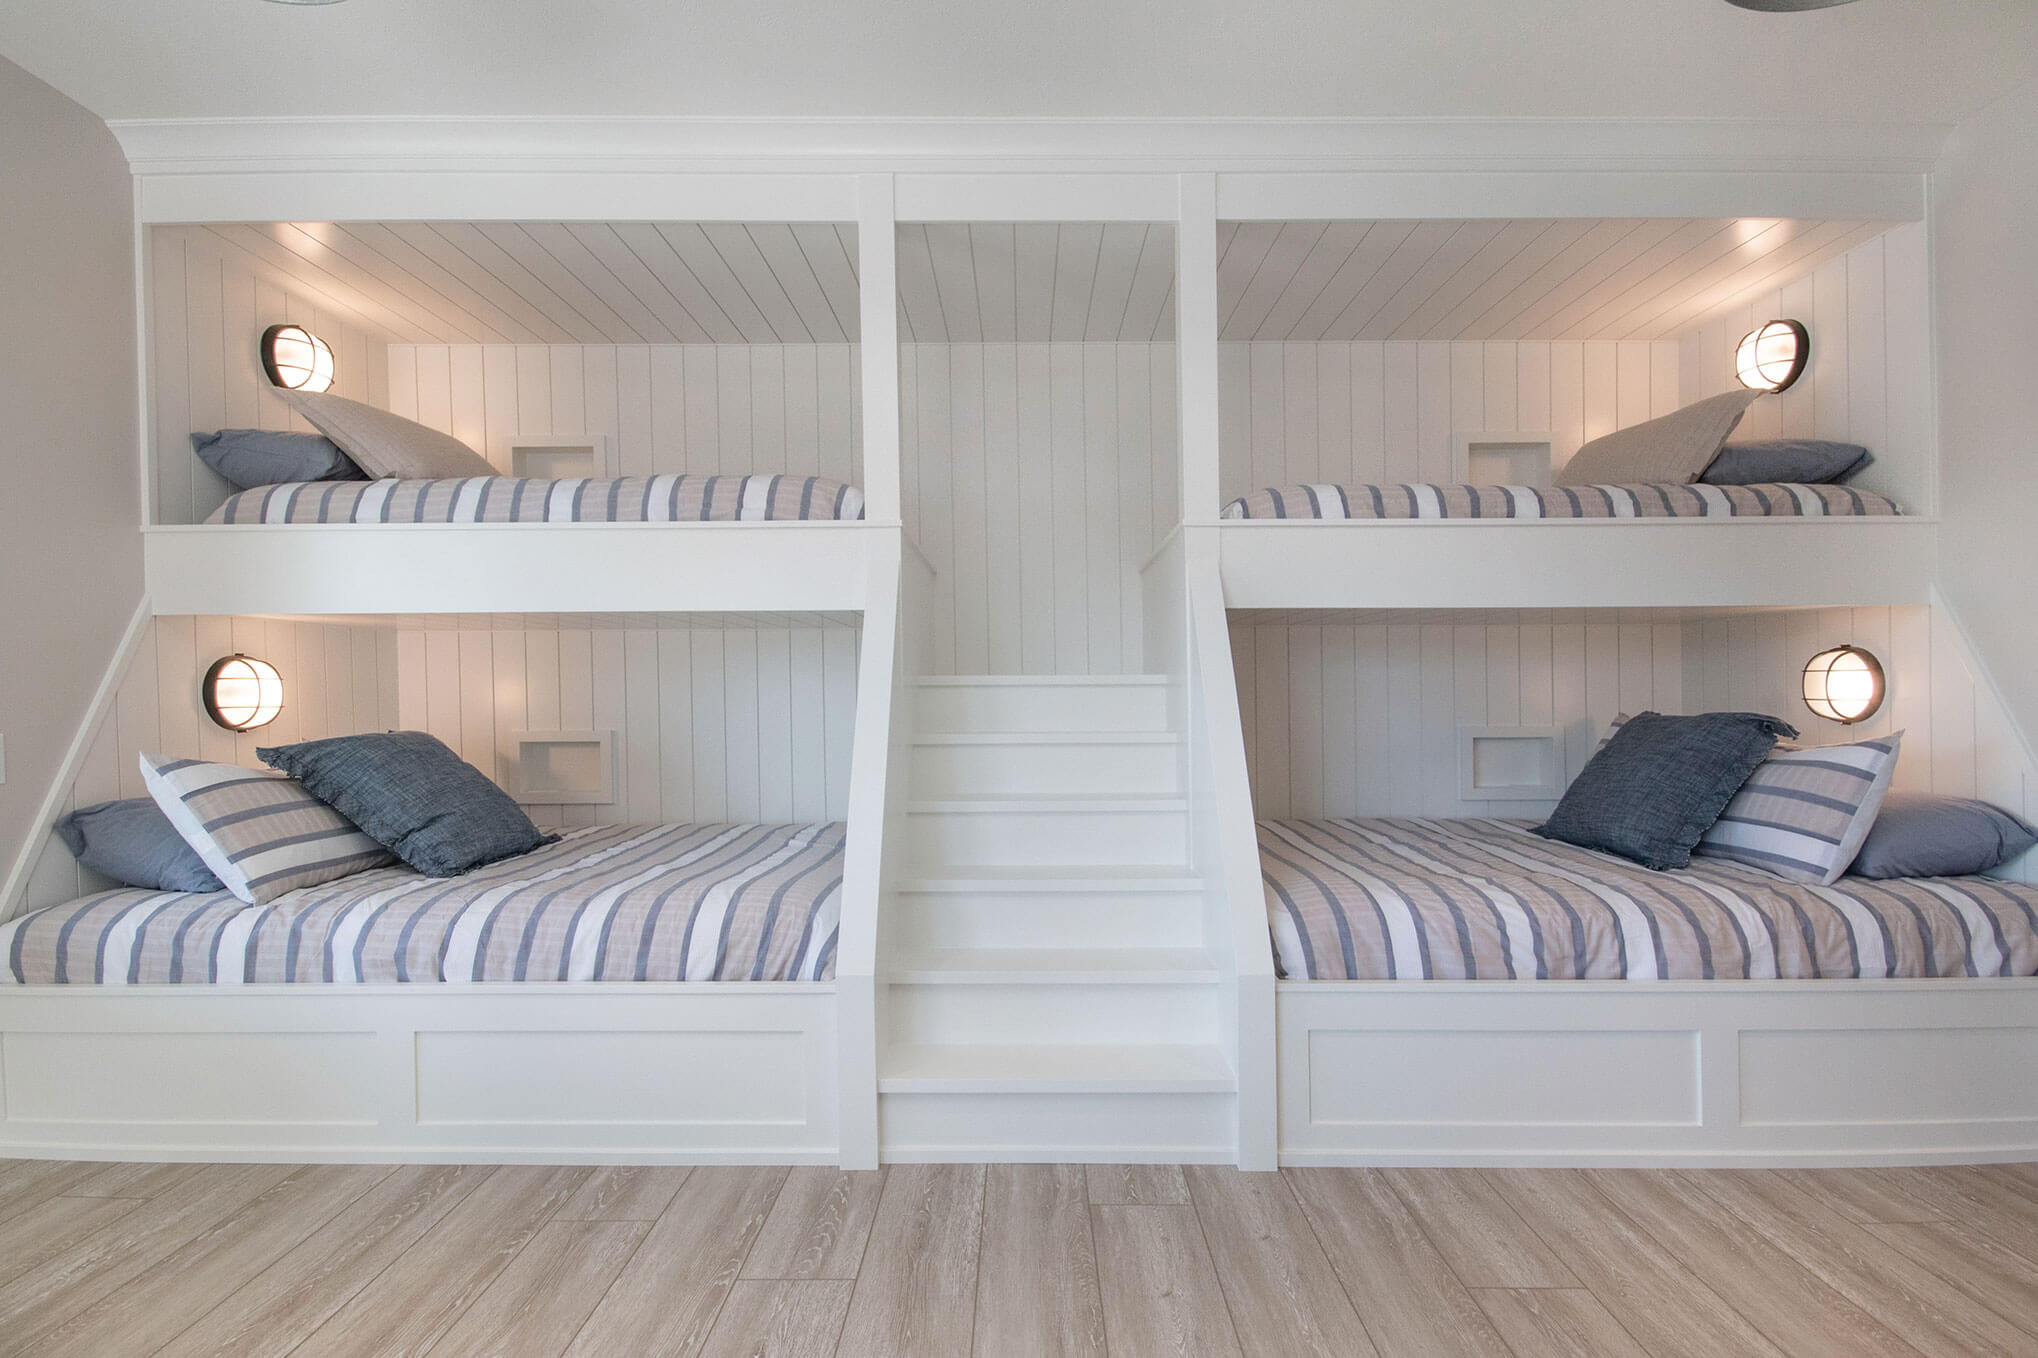 Built in Beds Interior Design Inspiration